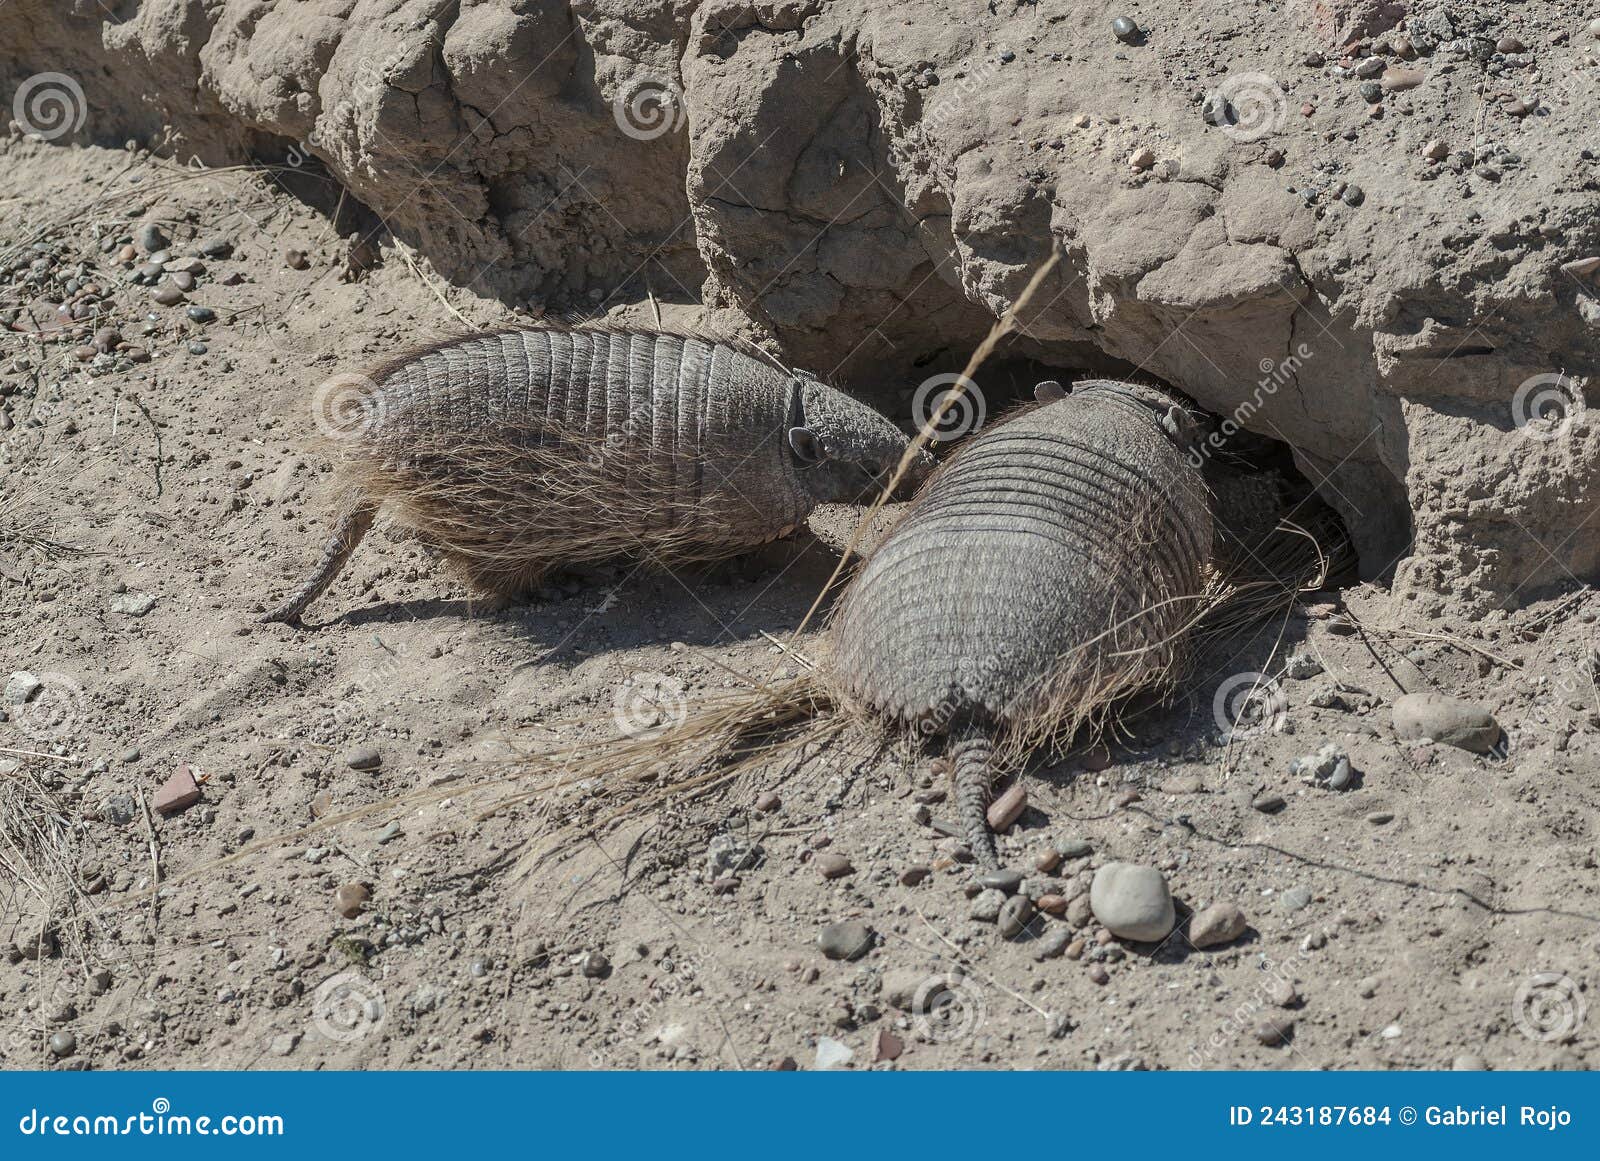 two armadillos entering the burrow,